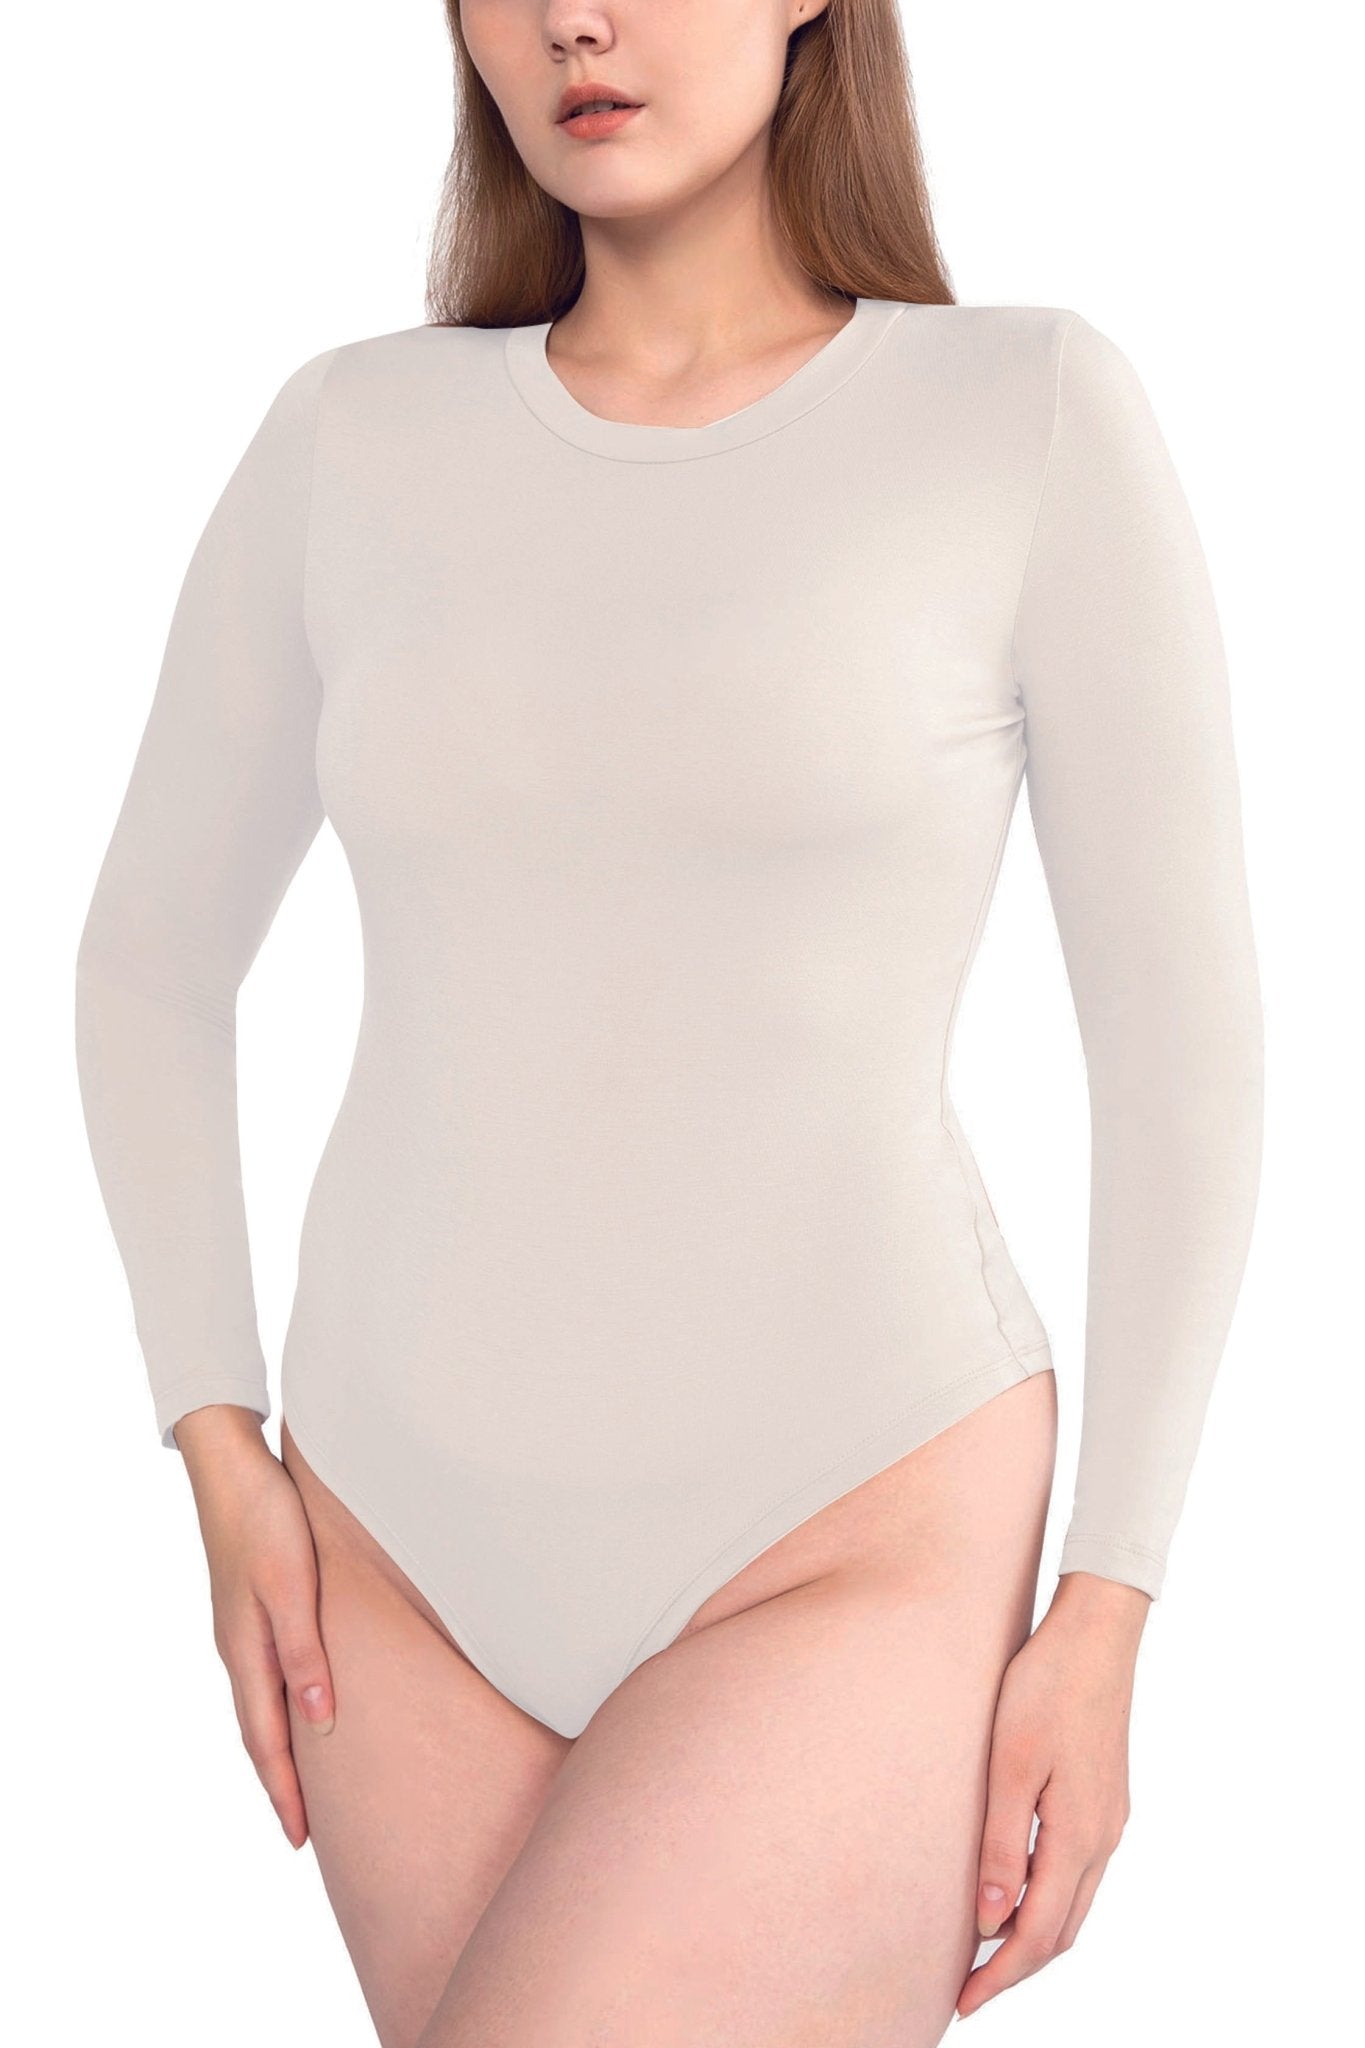 N.5 Long Sleeve Bodysuit - POSESHE